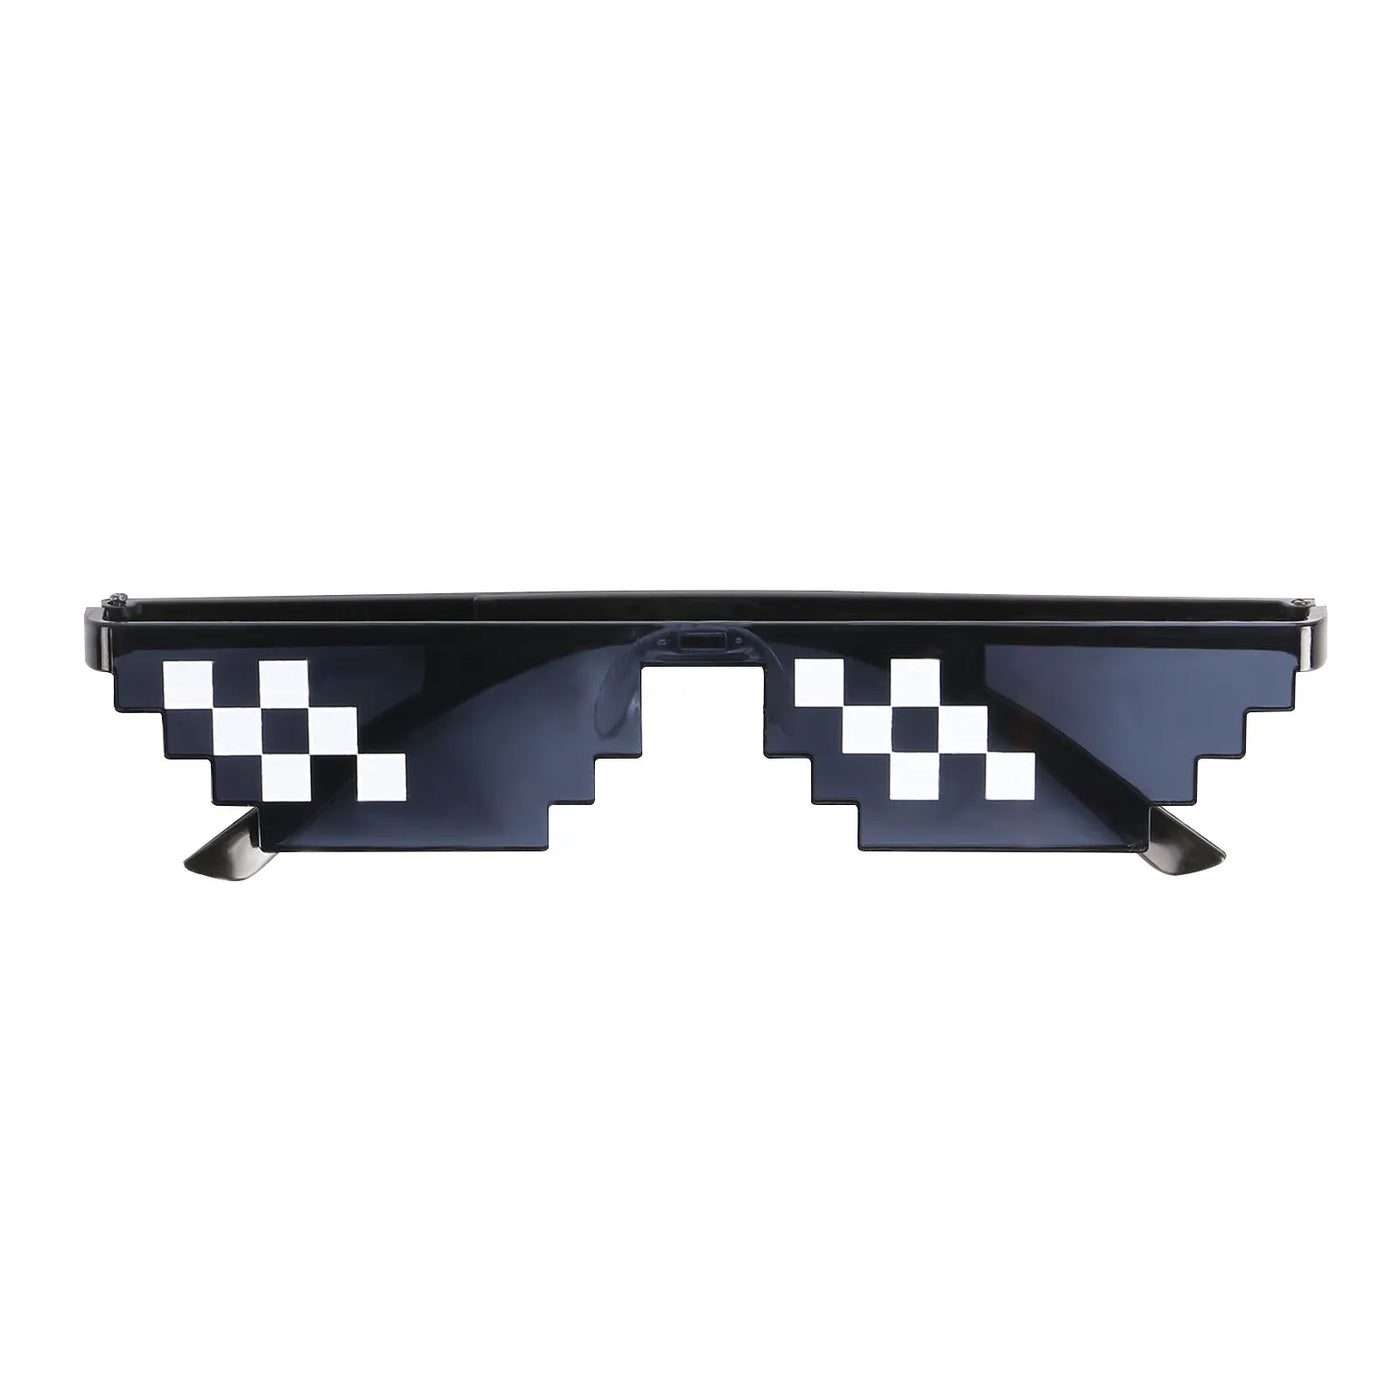 Sunglasses - 8-Bit Thug Life Mosaic Glasses Sun Glasses